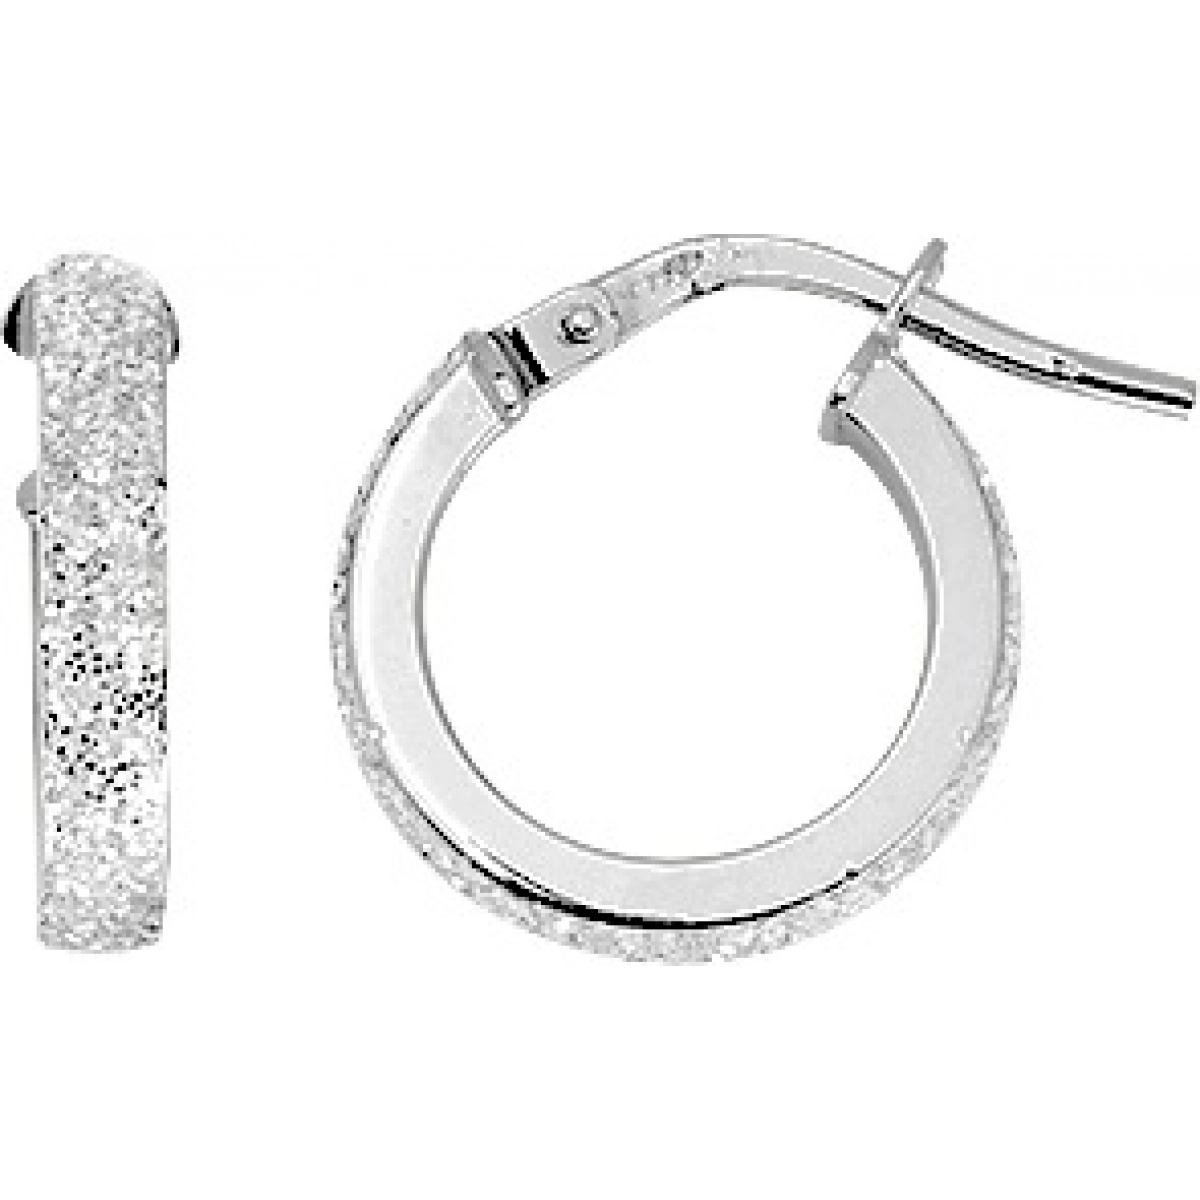 Hoops earrings pair w. rhod and glitter 18K YG  Lua Blanca  3686GR.0